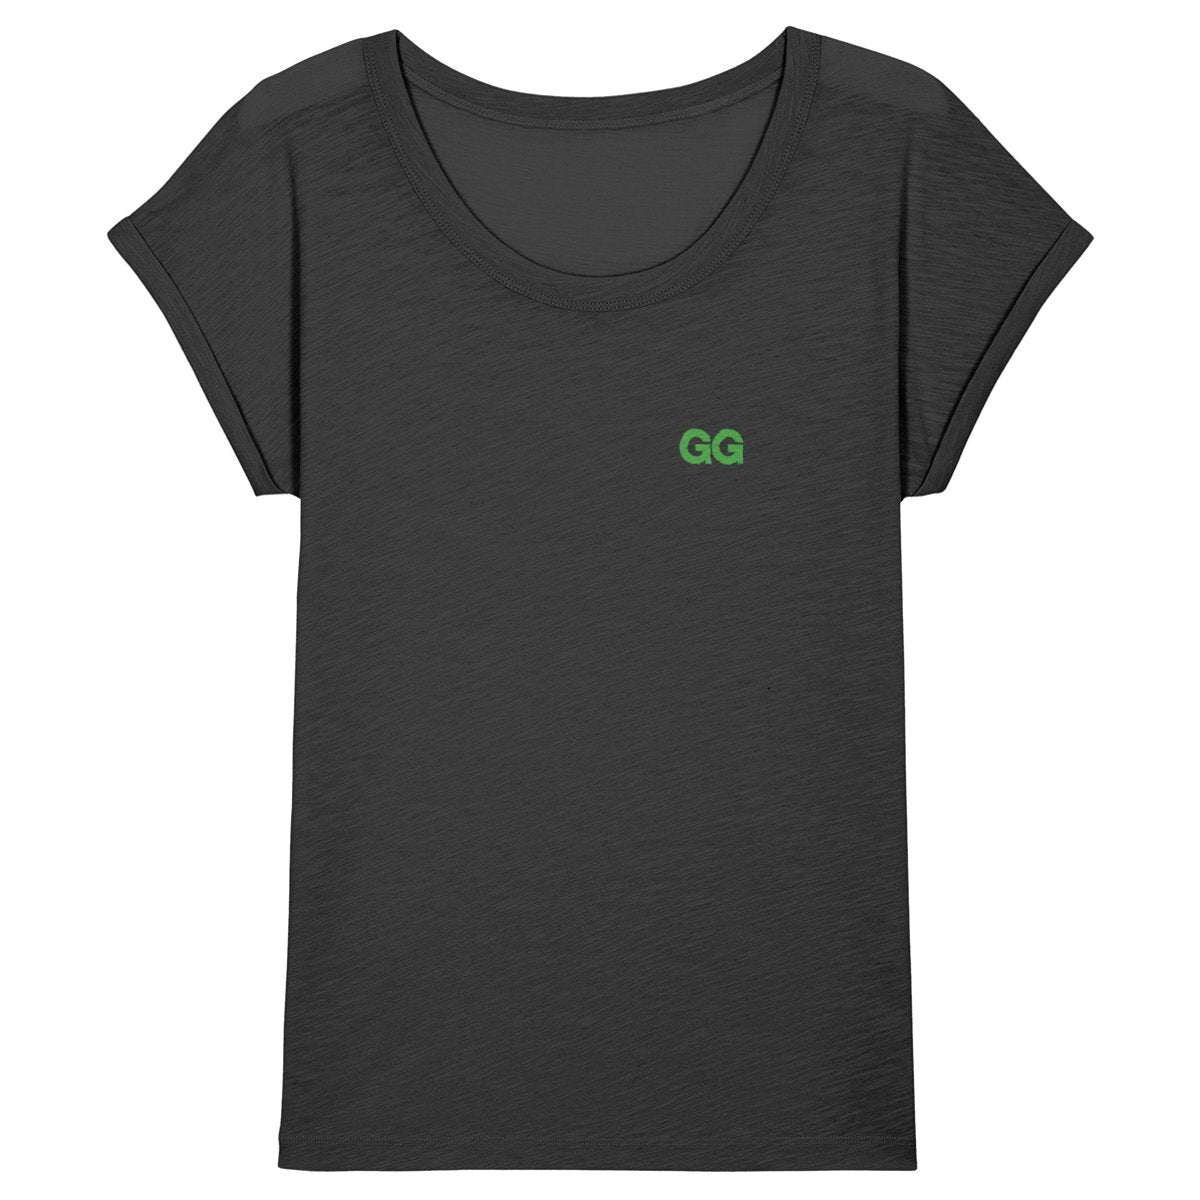 Green GG Women's Outstanding T-shirt